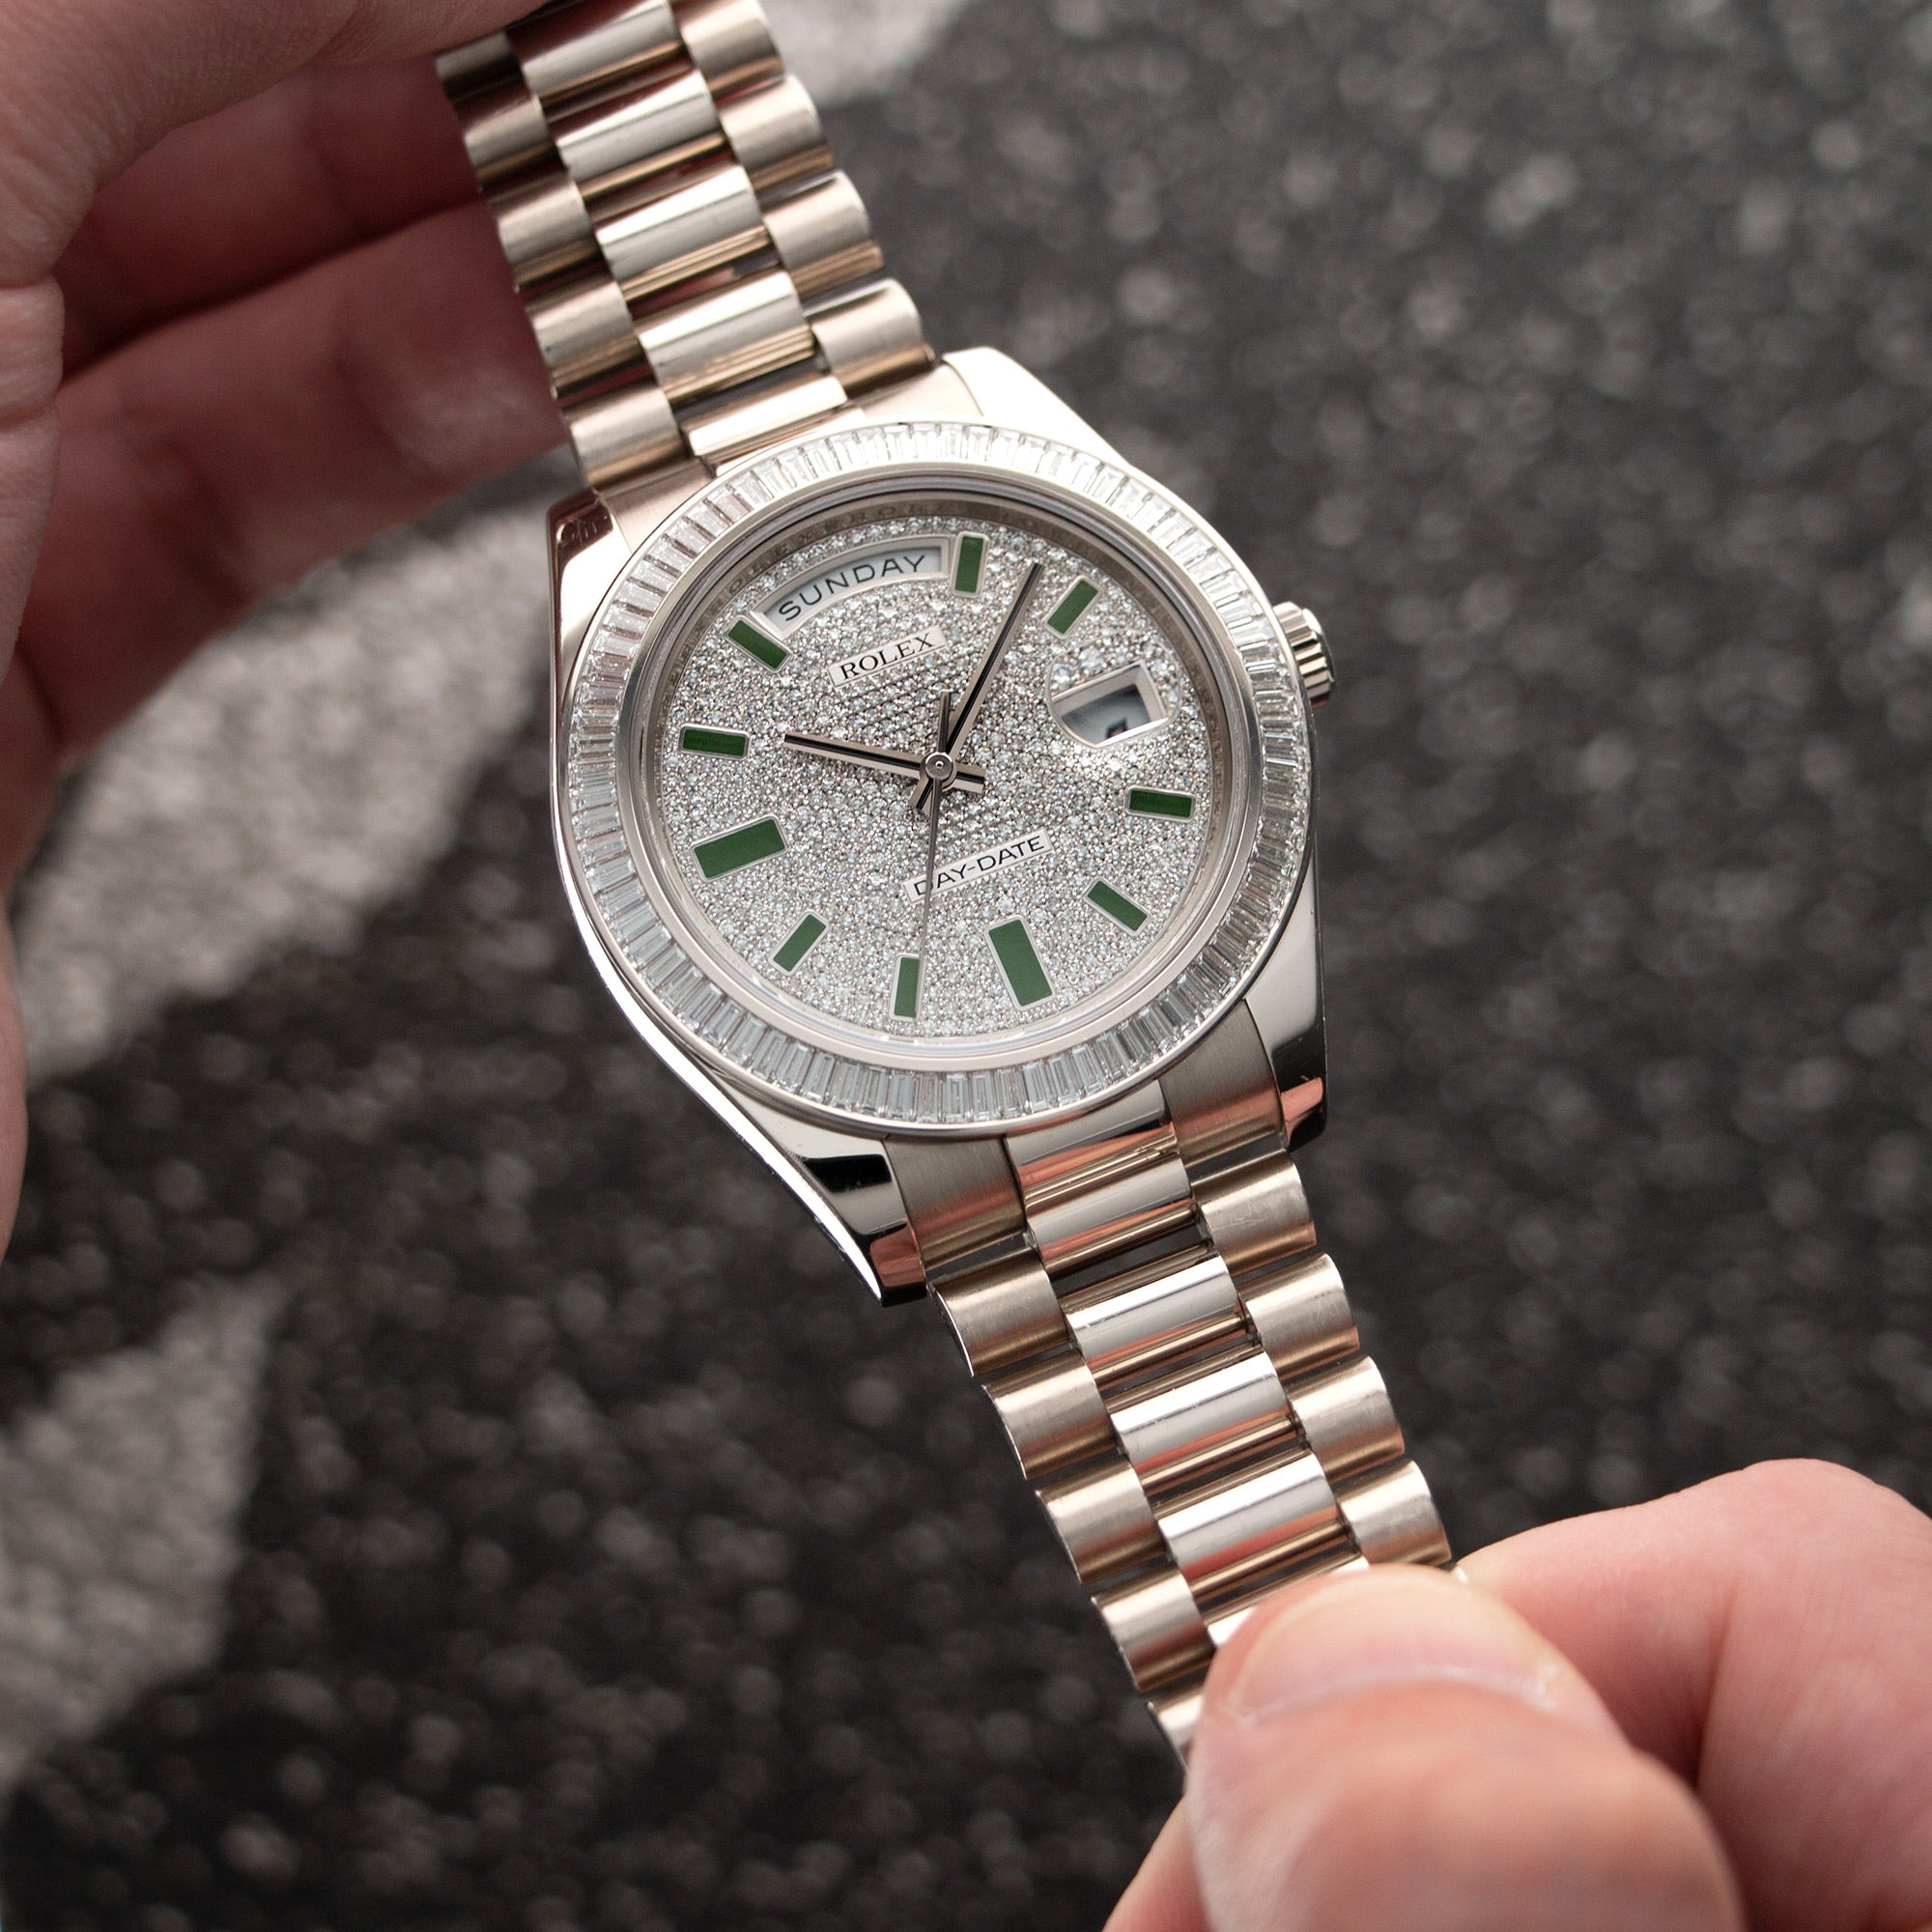 Rolex - Rolex White Gold Day-Date Baguette Diamond Watch Ref. 218399 - The Keystone Watches